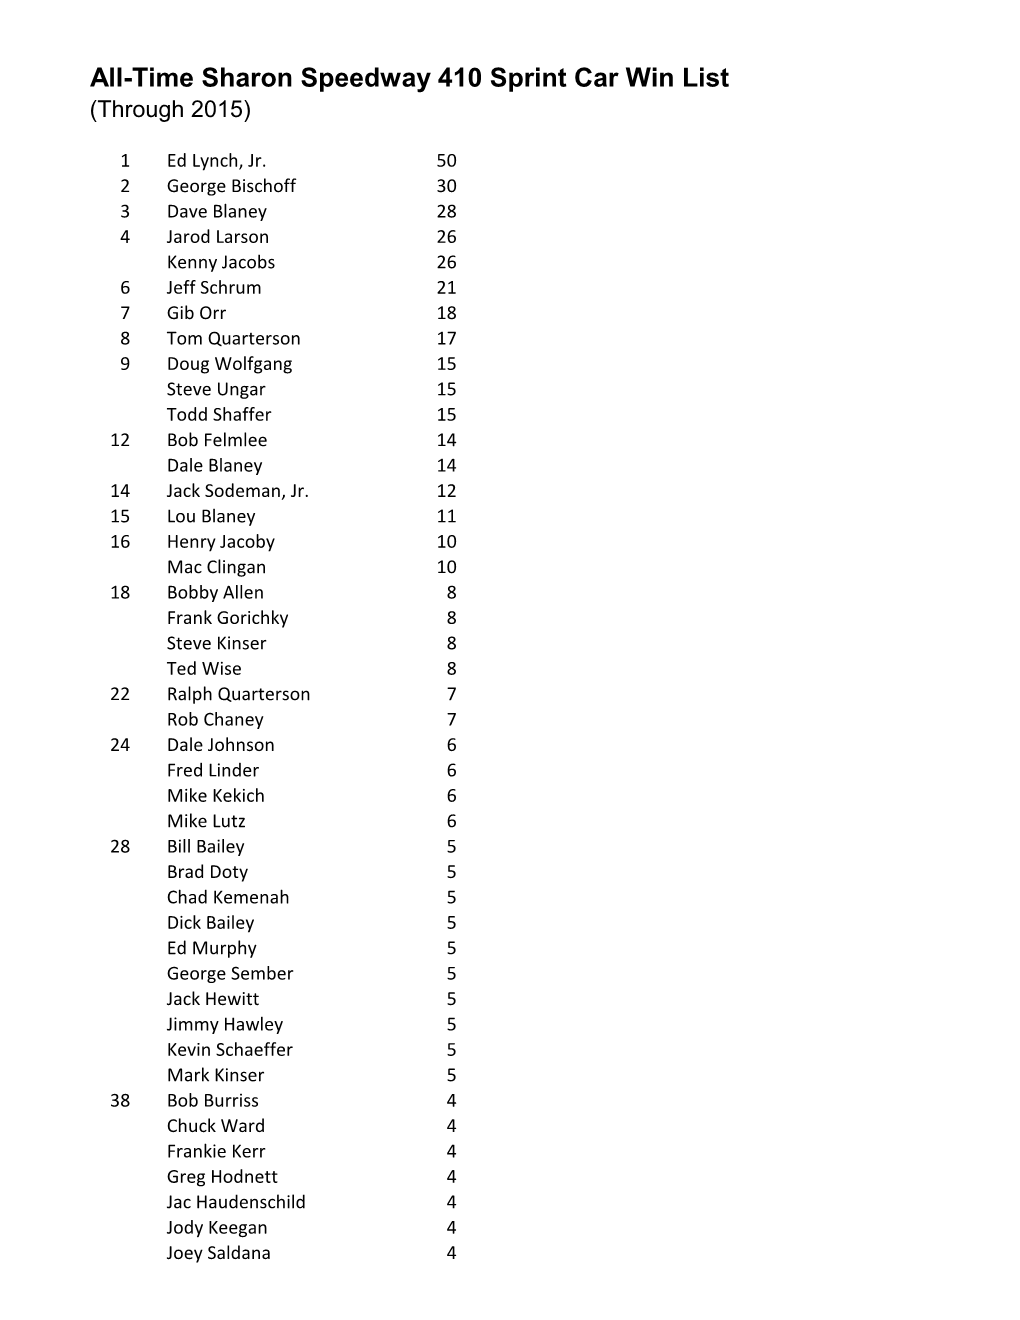 All-Time Sharon Speedway 410 Sprint Car Win List (Through 2015)